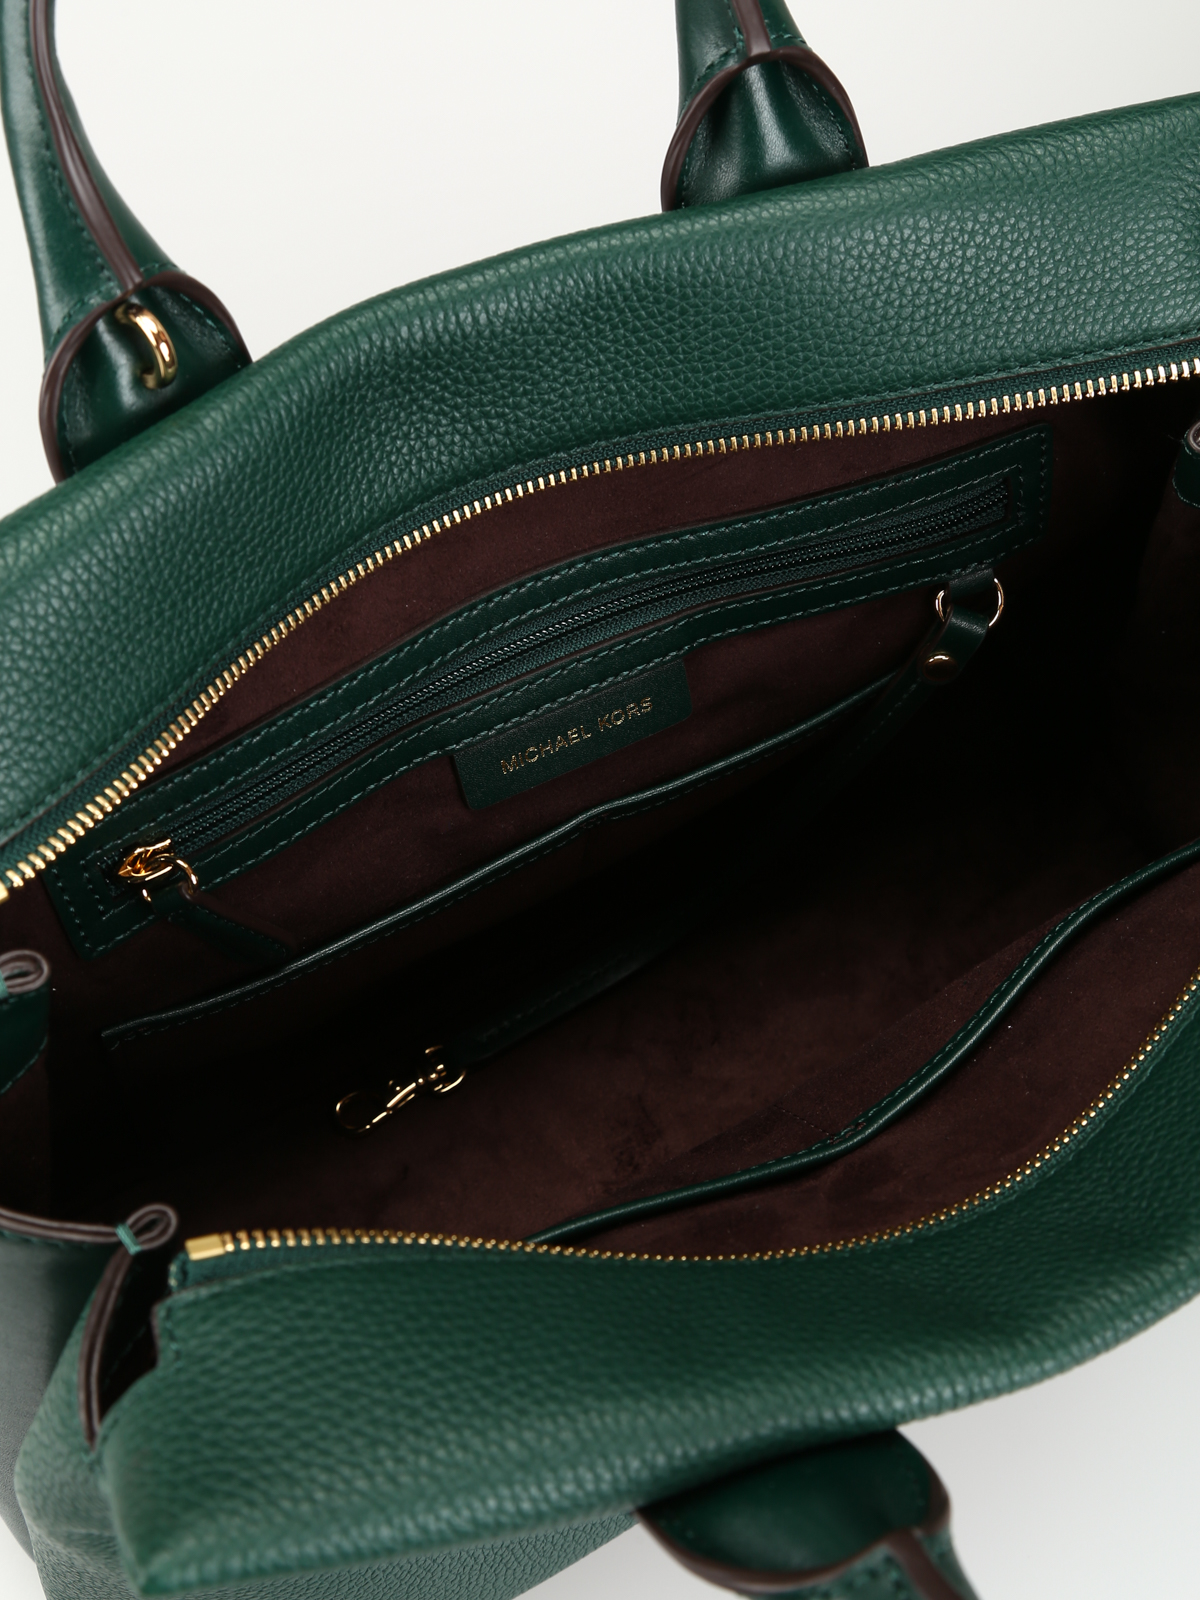 Buy Green Handbags for Women by Michael Kors Online